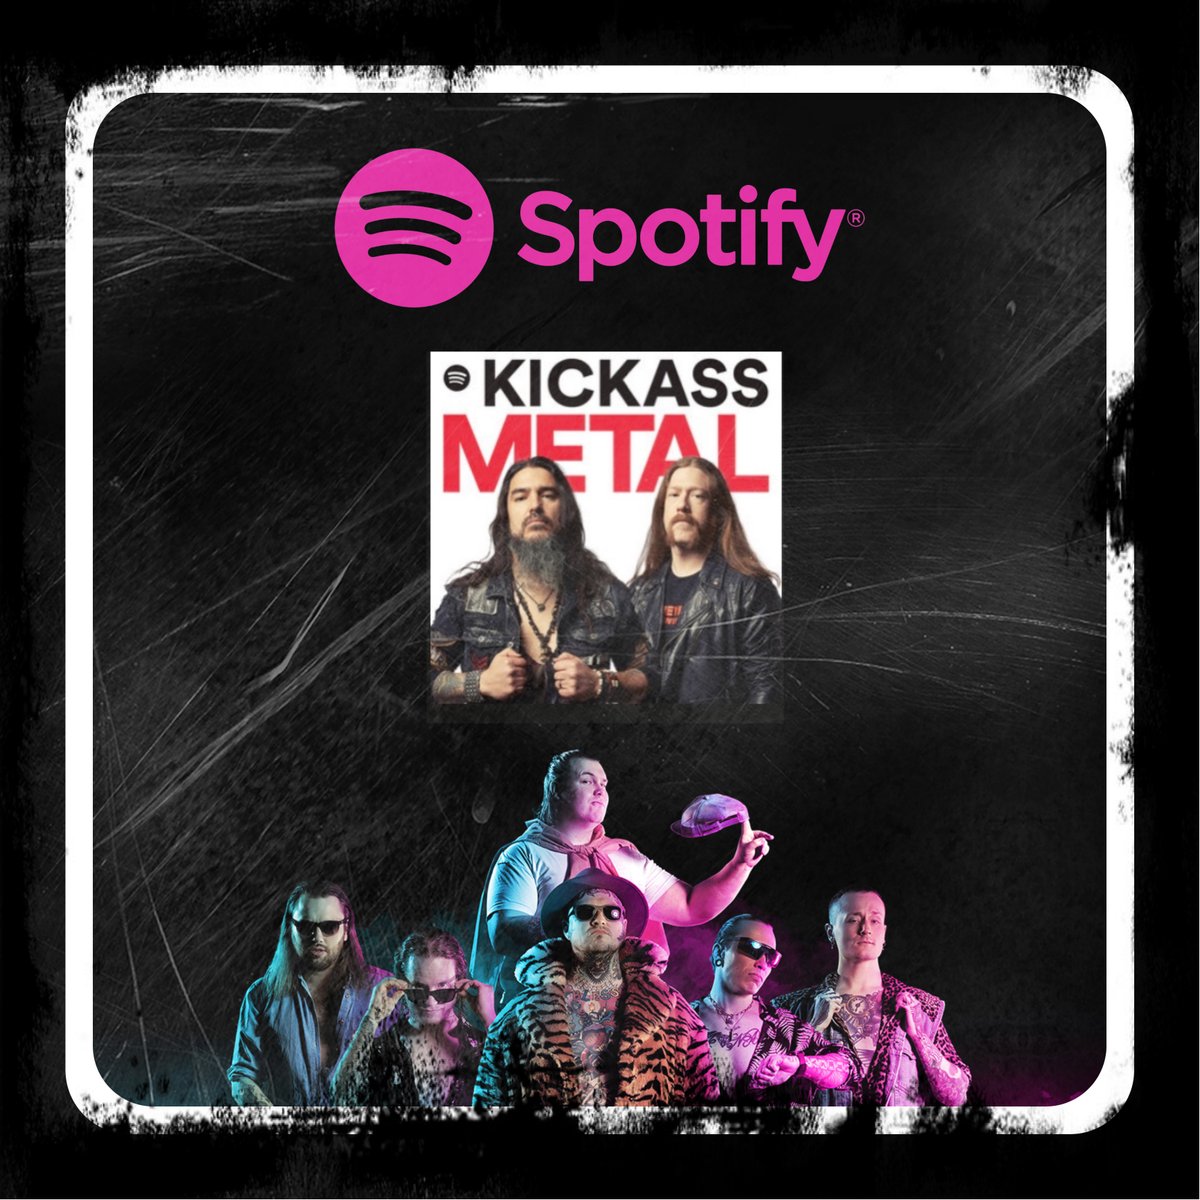 #Downfall added to @Spotify Kickass Metal Playlist! spoti.fi/KAMetal @Arising_Empire @CultNordic @MUSAMAAILMA @ESPGuitarsUSA @espn @ContraPromotion @NemAgency @SpotifySuomi #onemorningleft #hyperactive #metalcore #kickassmetal #spotify #spotifysuomi #numetal #FYP